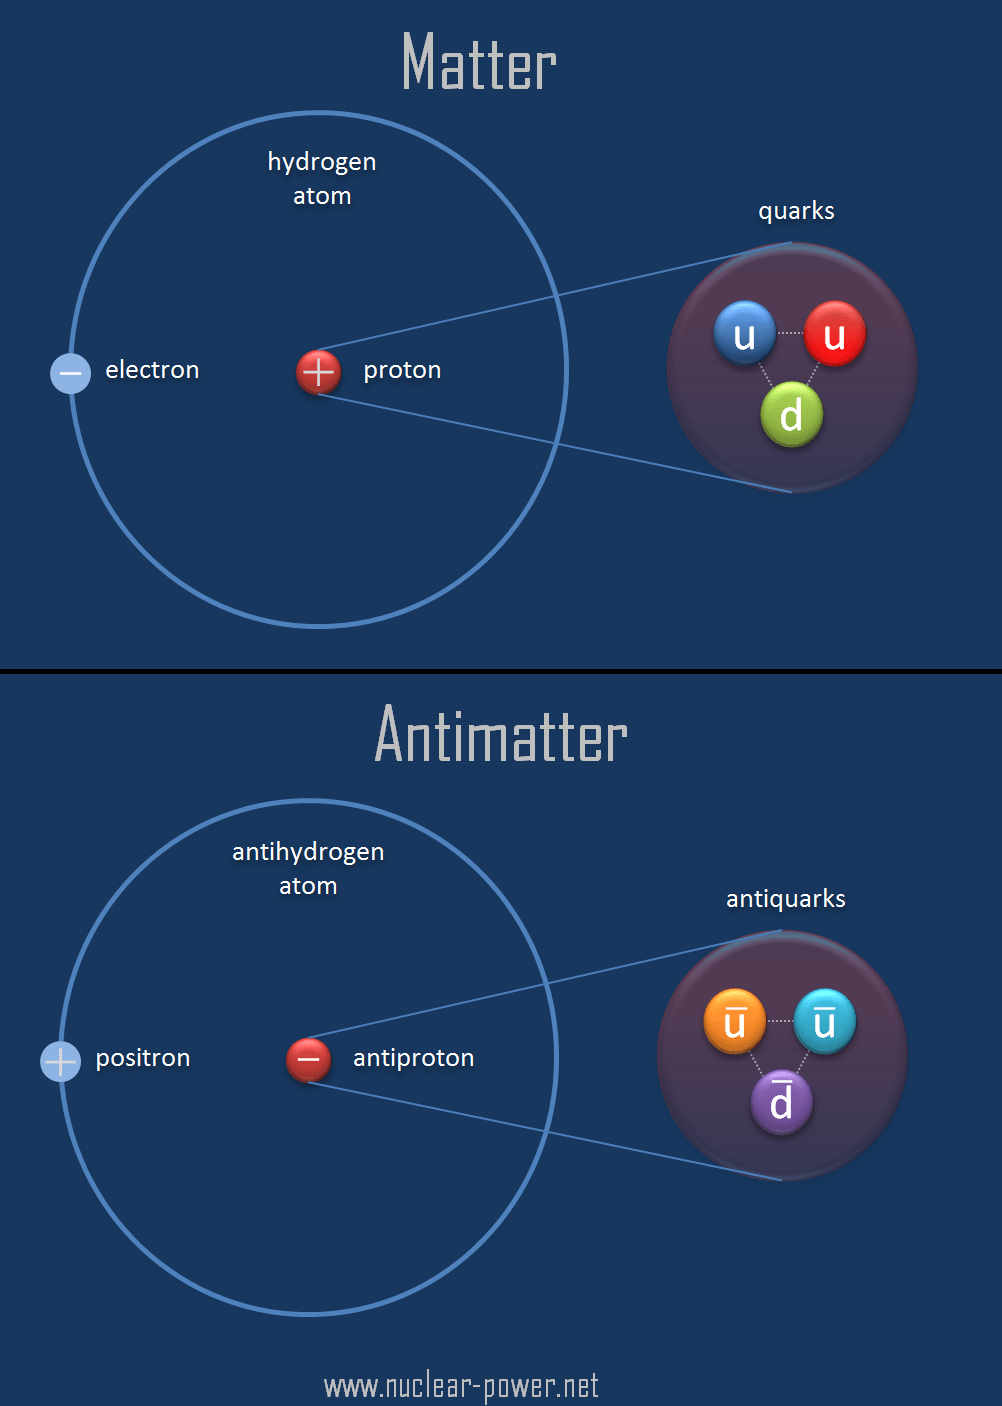 Matter - Antimatter Creation and Annihilation